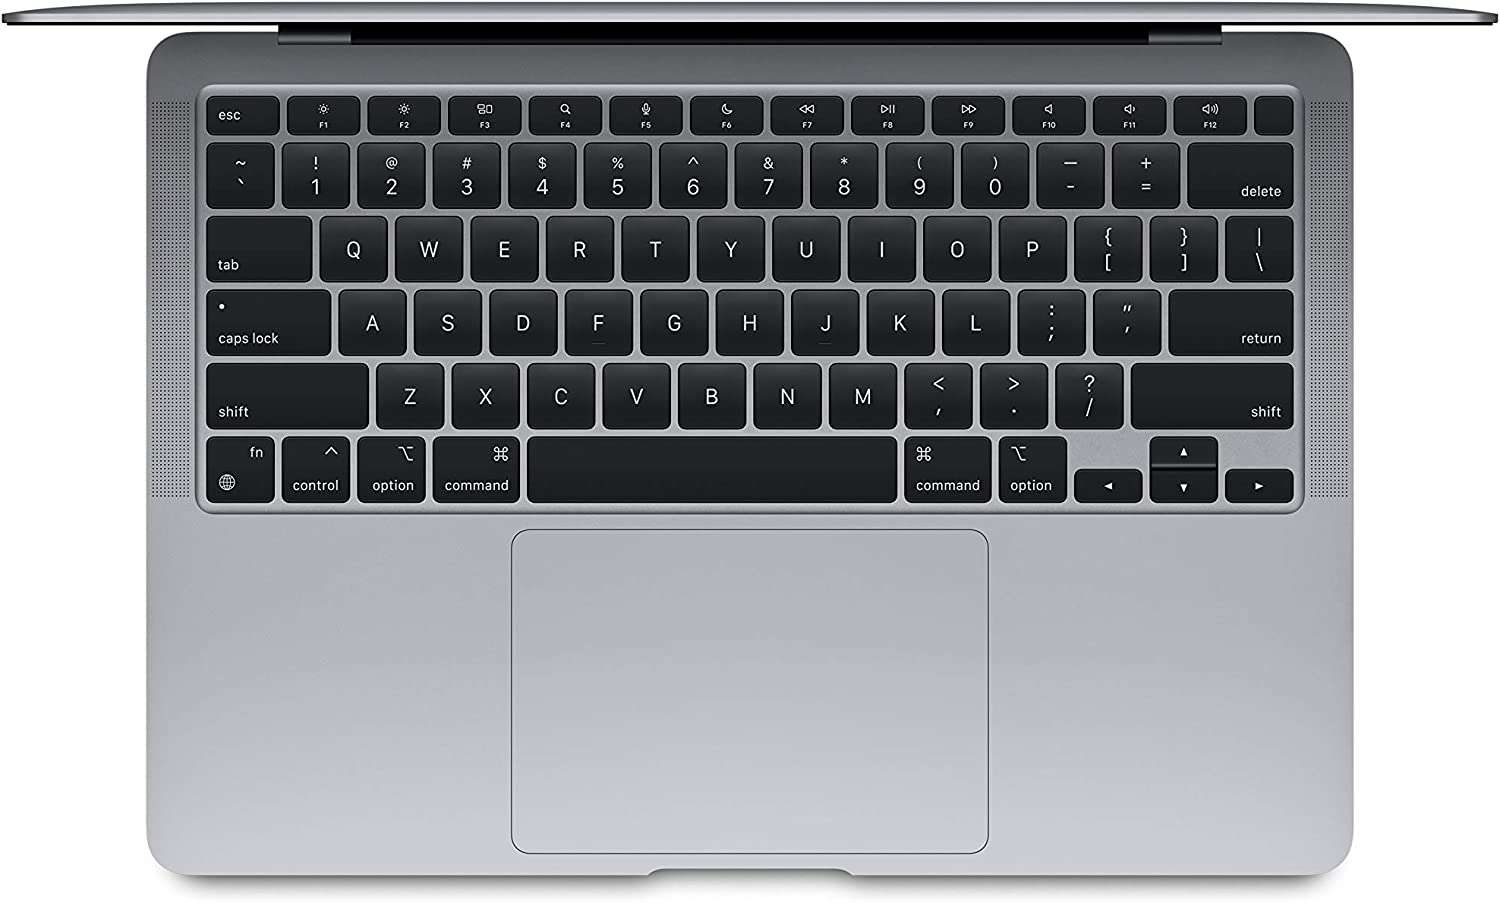 Apple Macbook Air 13 Inch -8GB RAM, 256GB SSD (Brand New)